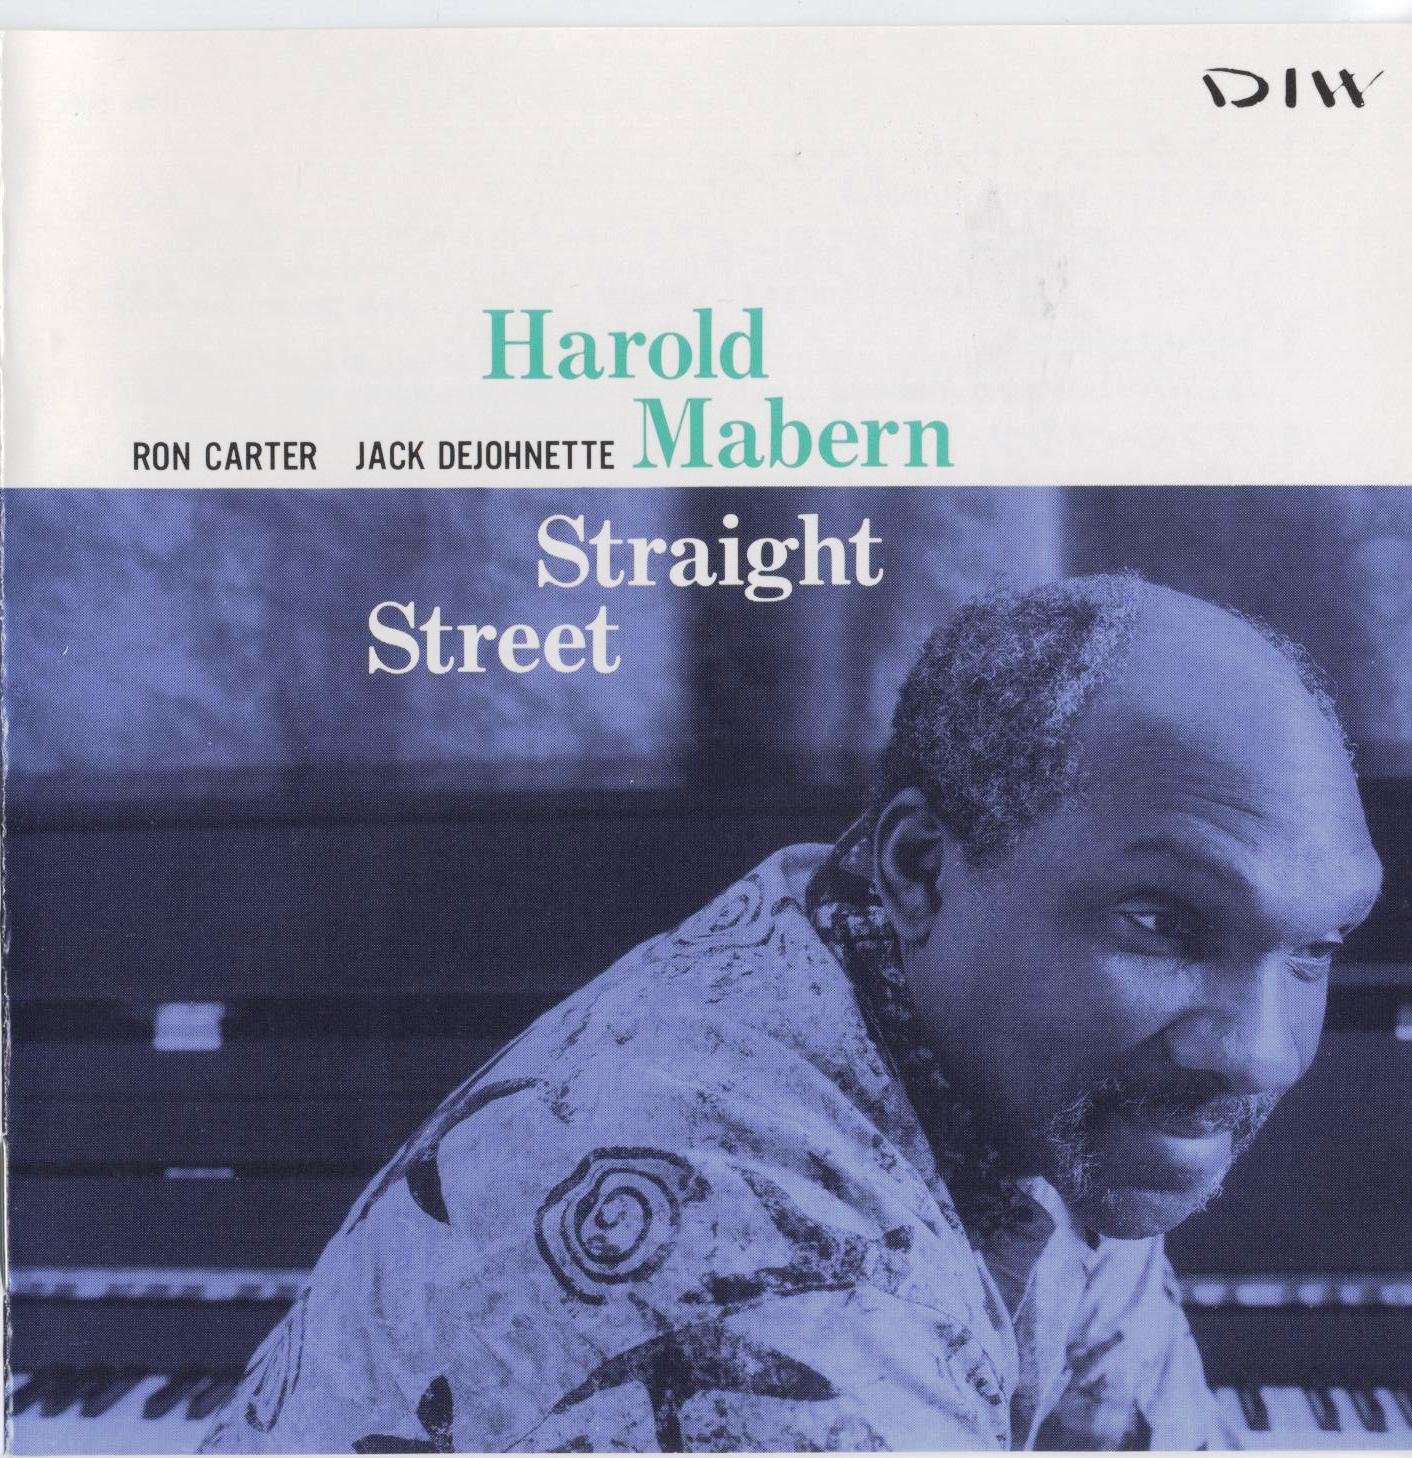 HAROLD MABERN - Straight Street cover 